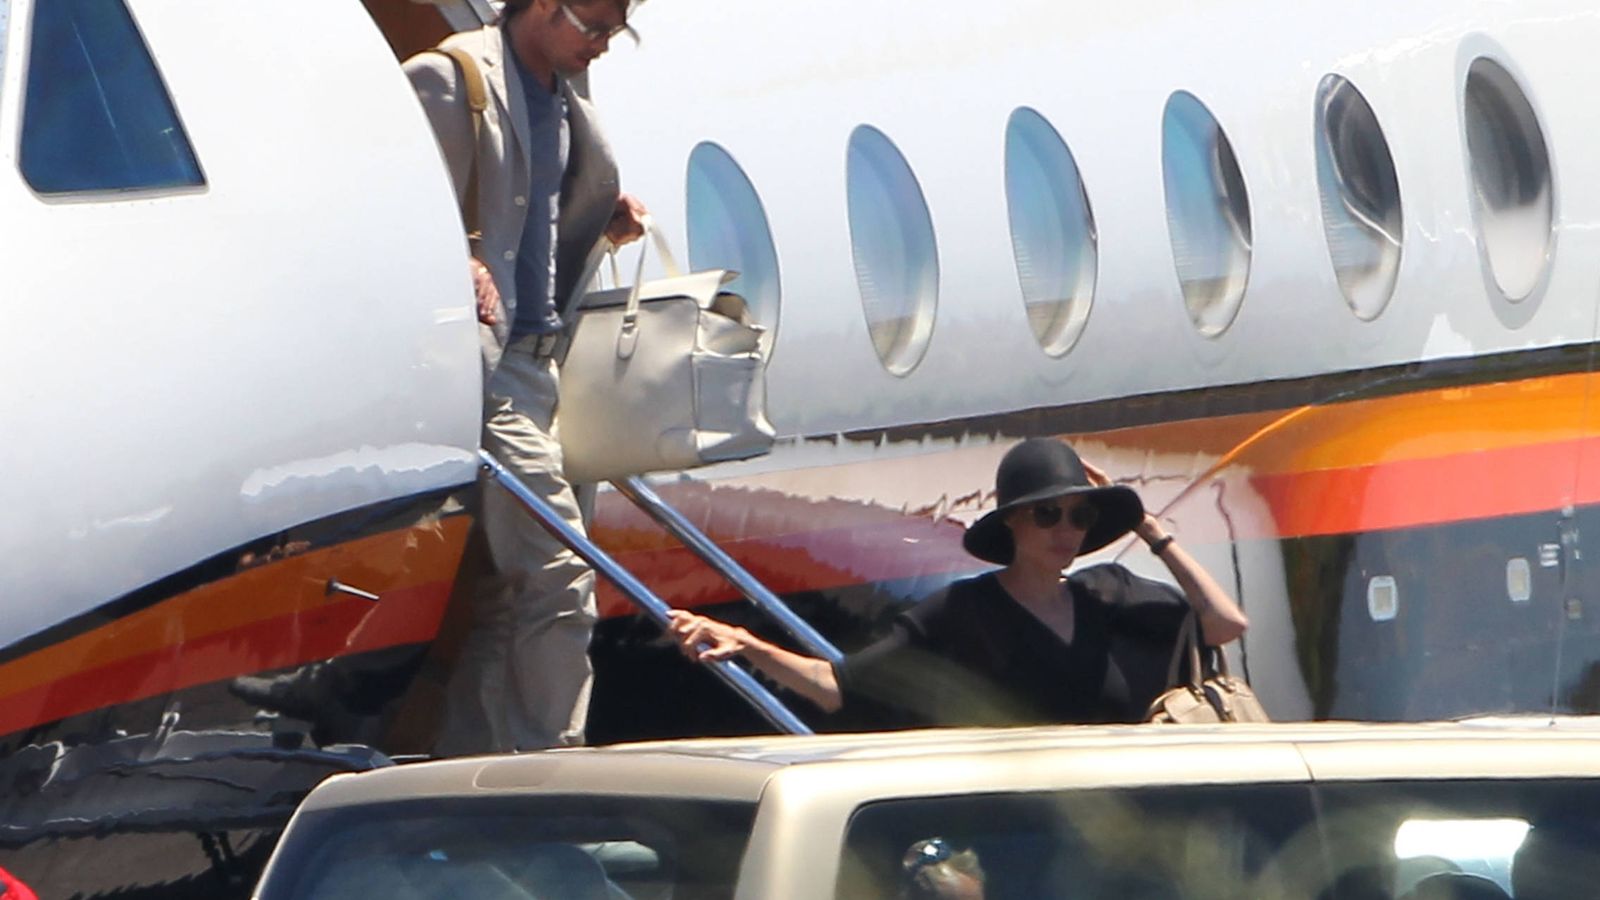 Foto: Brad Pitt y Angelina Jolie en una imagen de archivo. (Gtres)